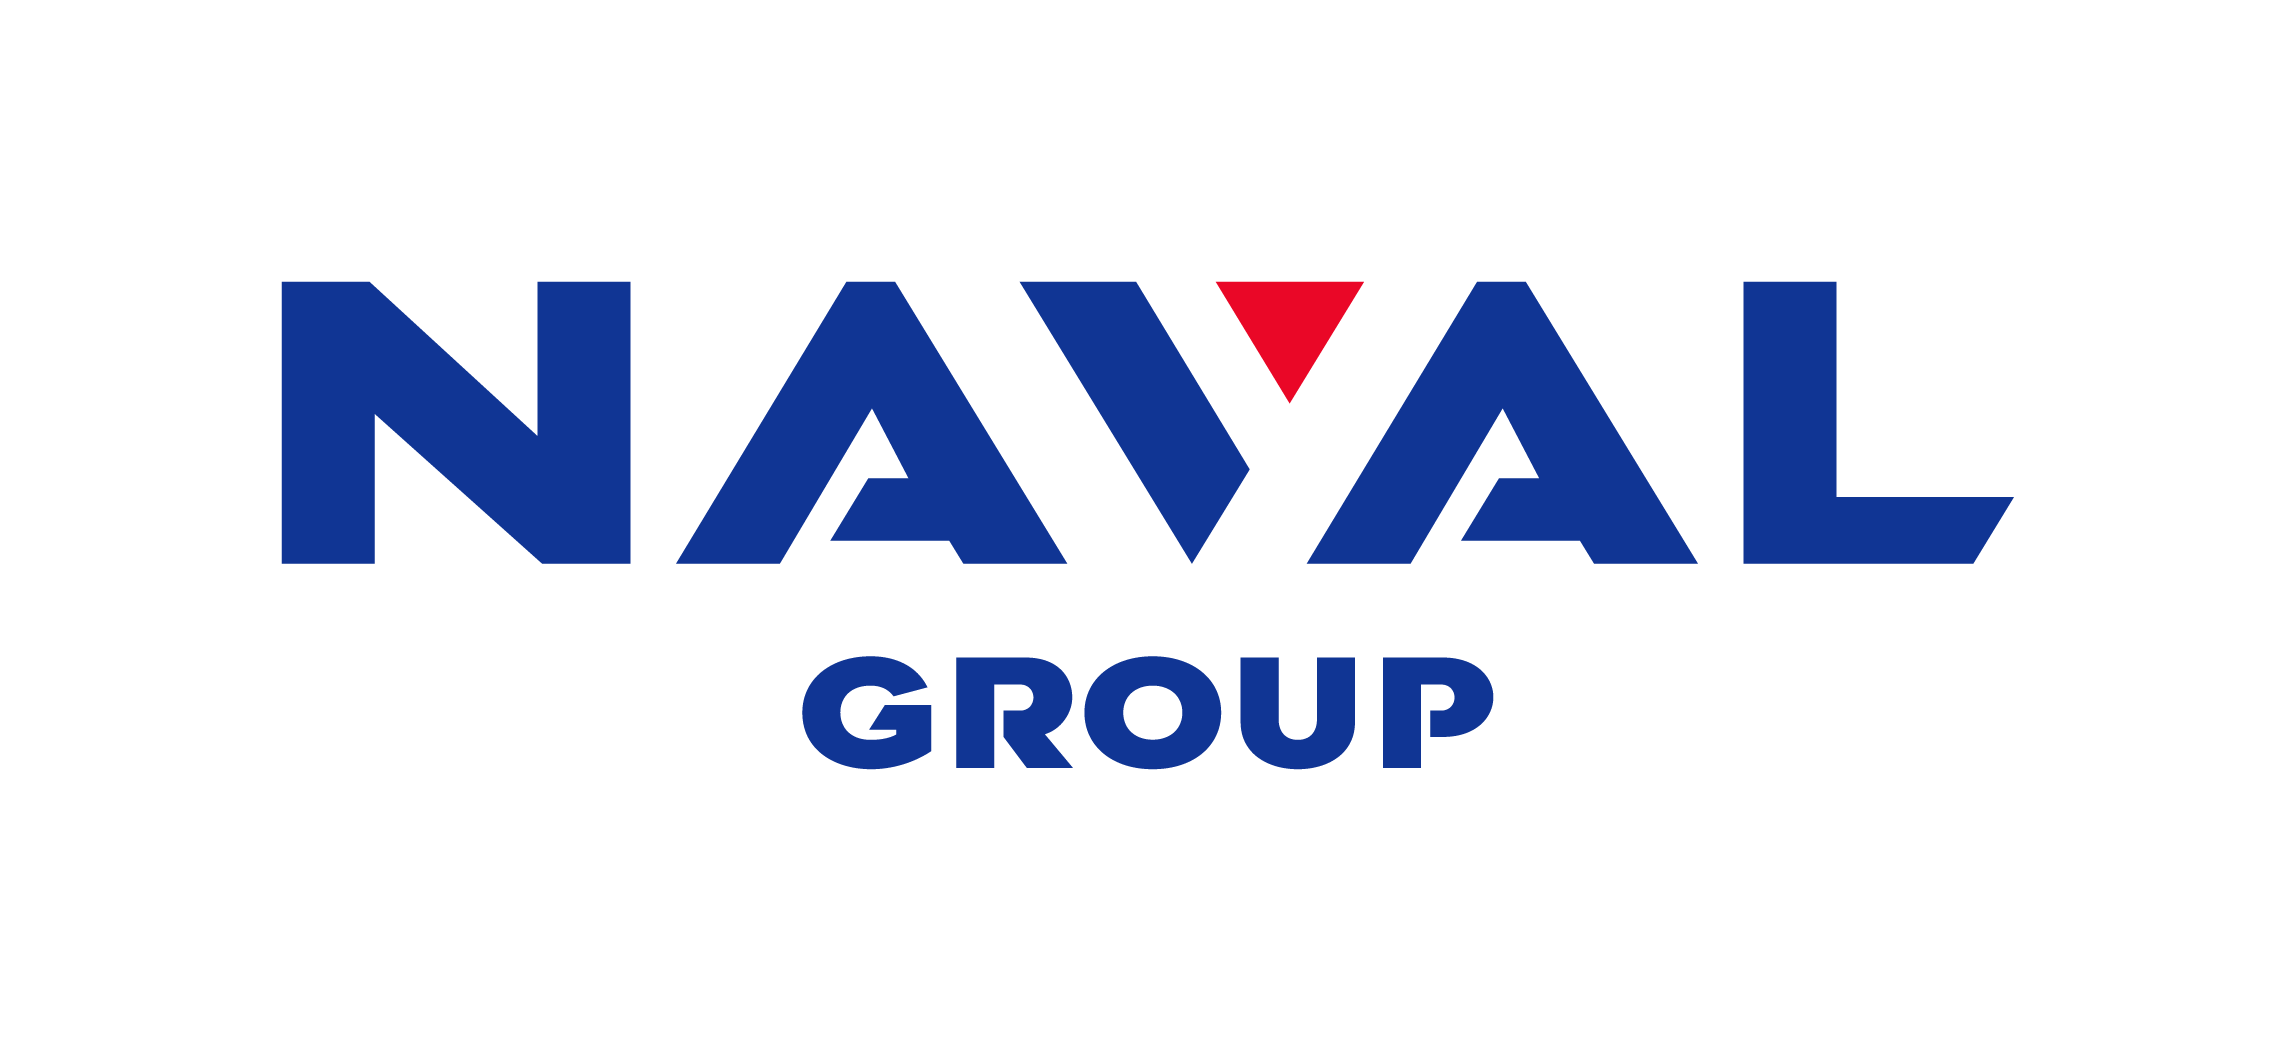 Naval Group Far East Pte. Ltd. logo